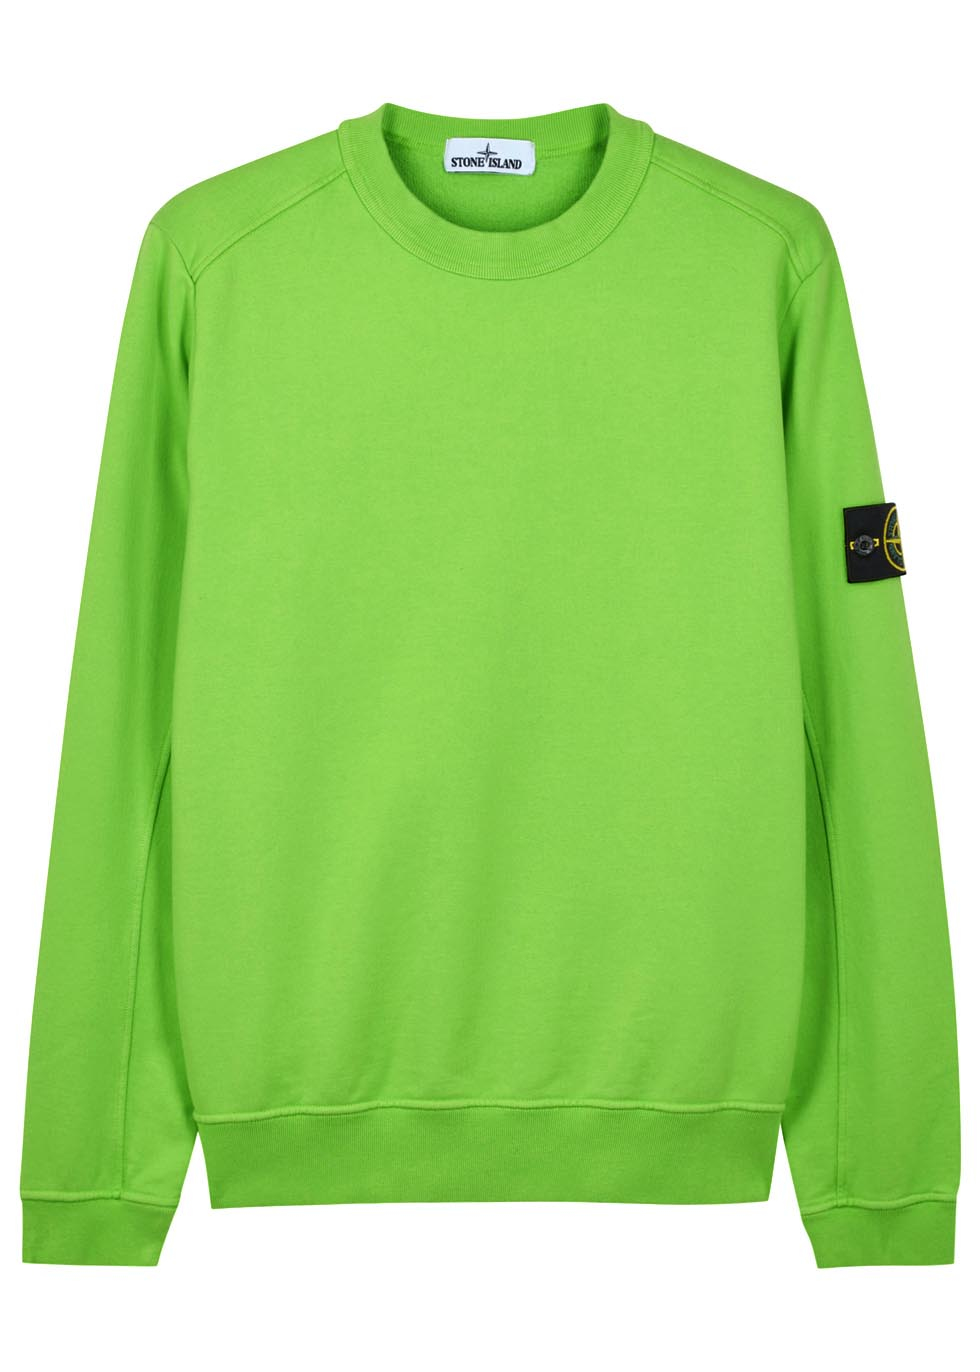 Stone Island Lime Green Cotton Jersey Sweatshirt for Men | Lyst UK